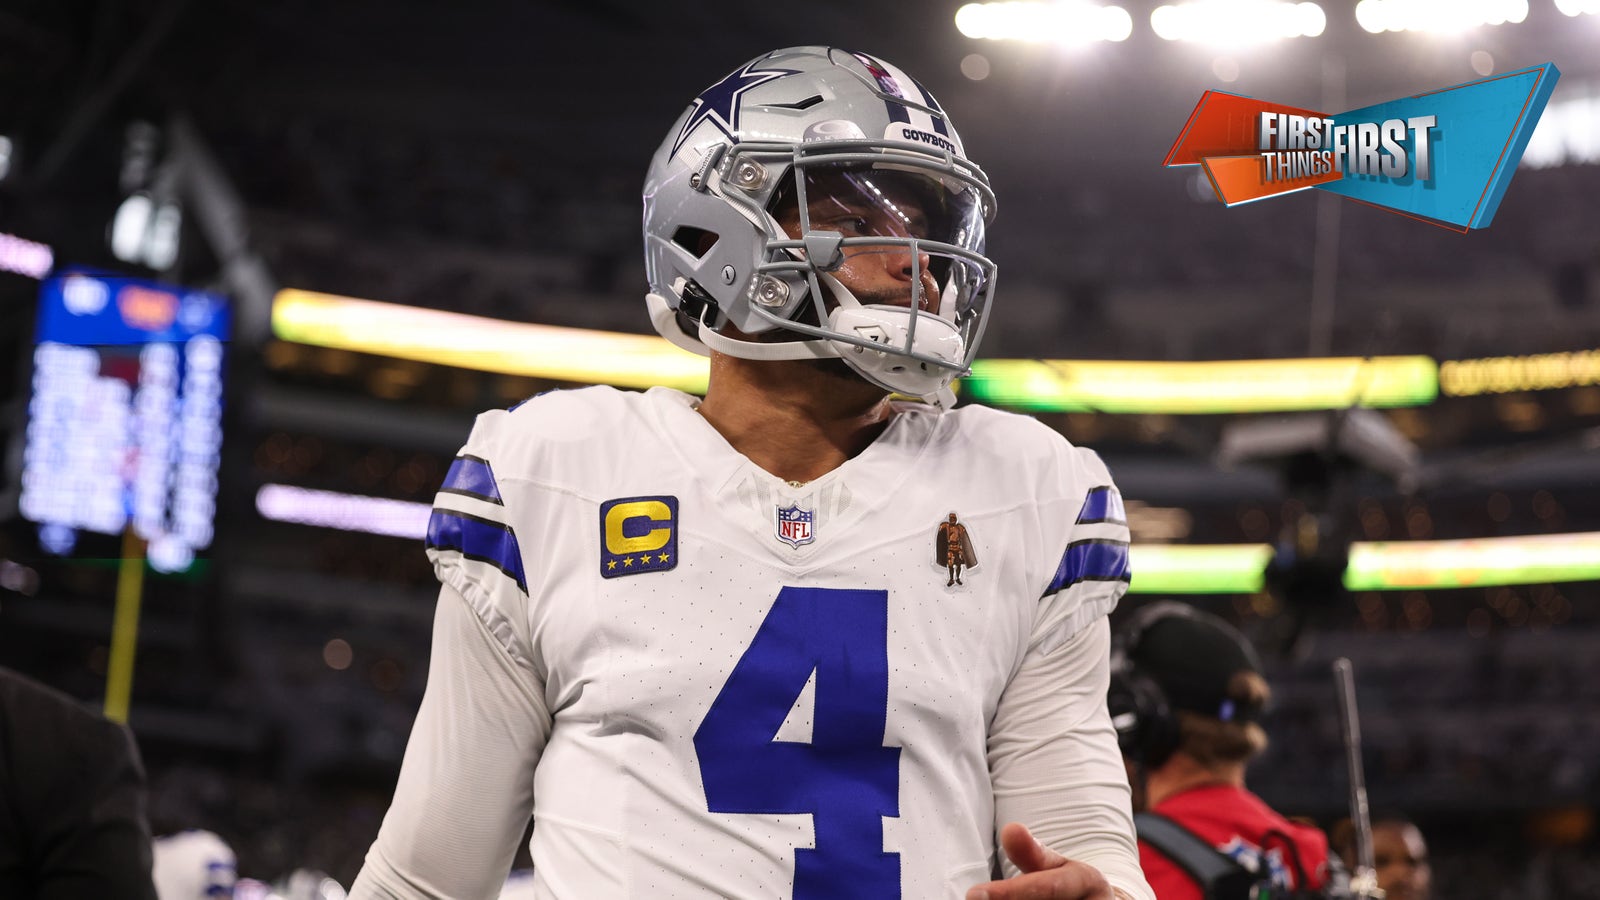 Will Dak Prescott’s contract negotiations impact the Cowboys’ season?